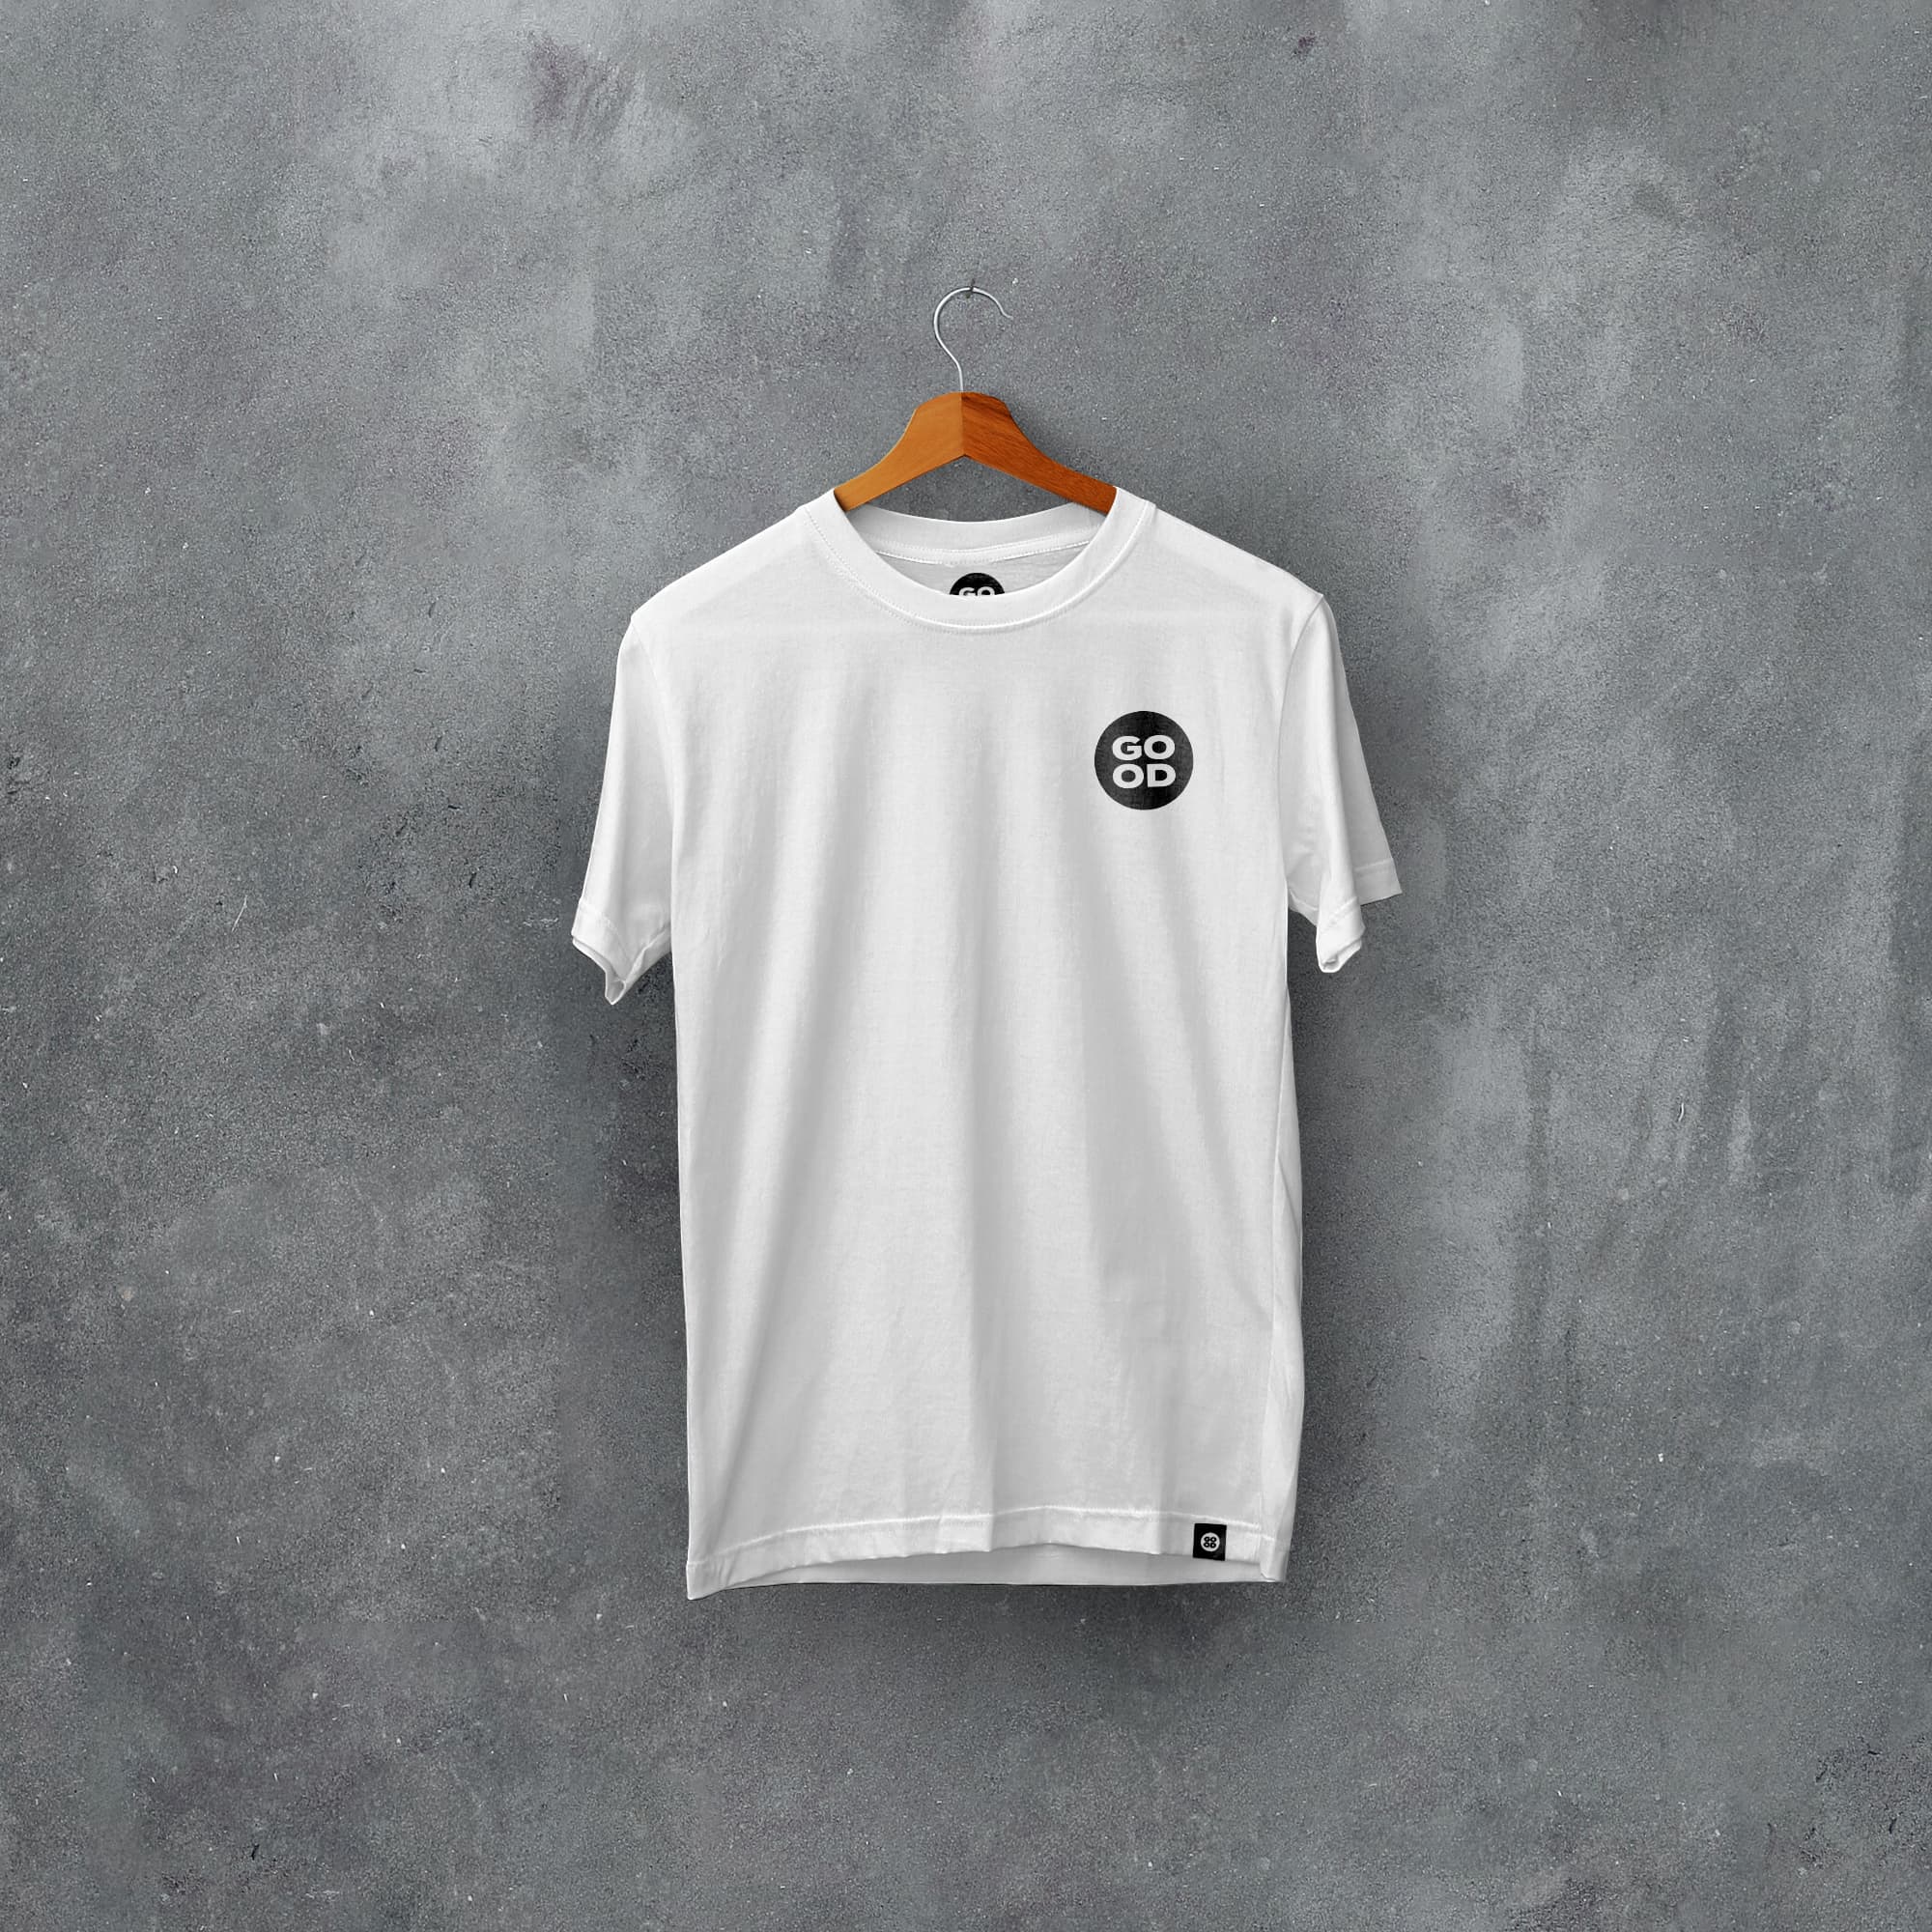 Chester Classic Kits Football T-Shirt